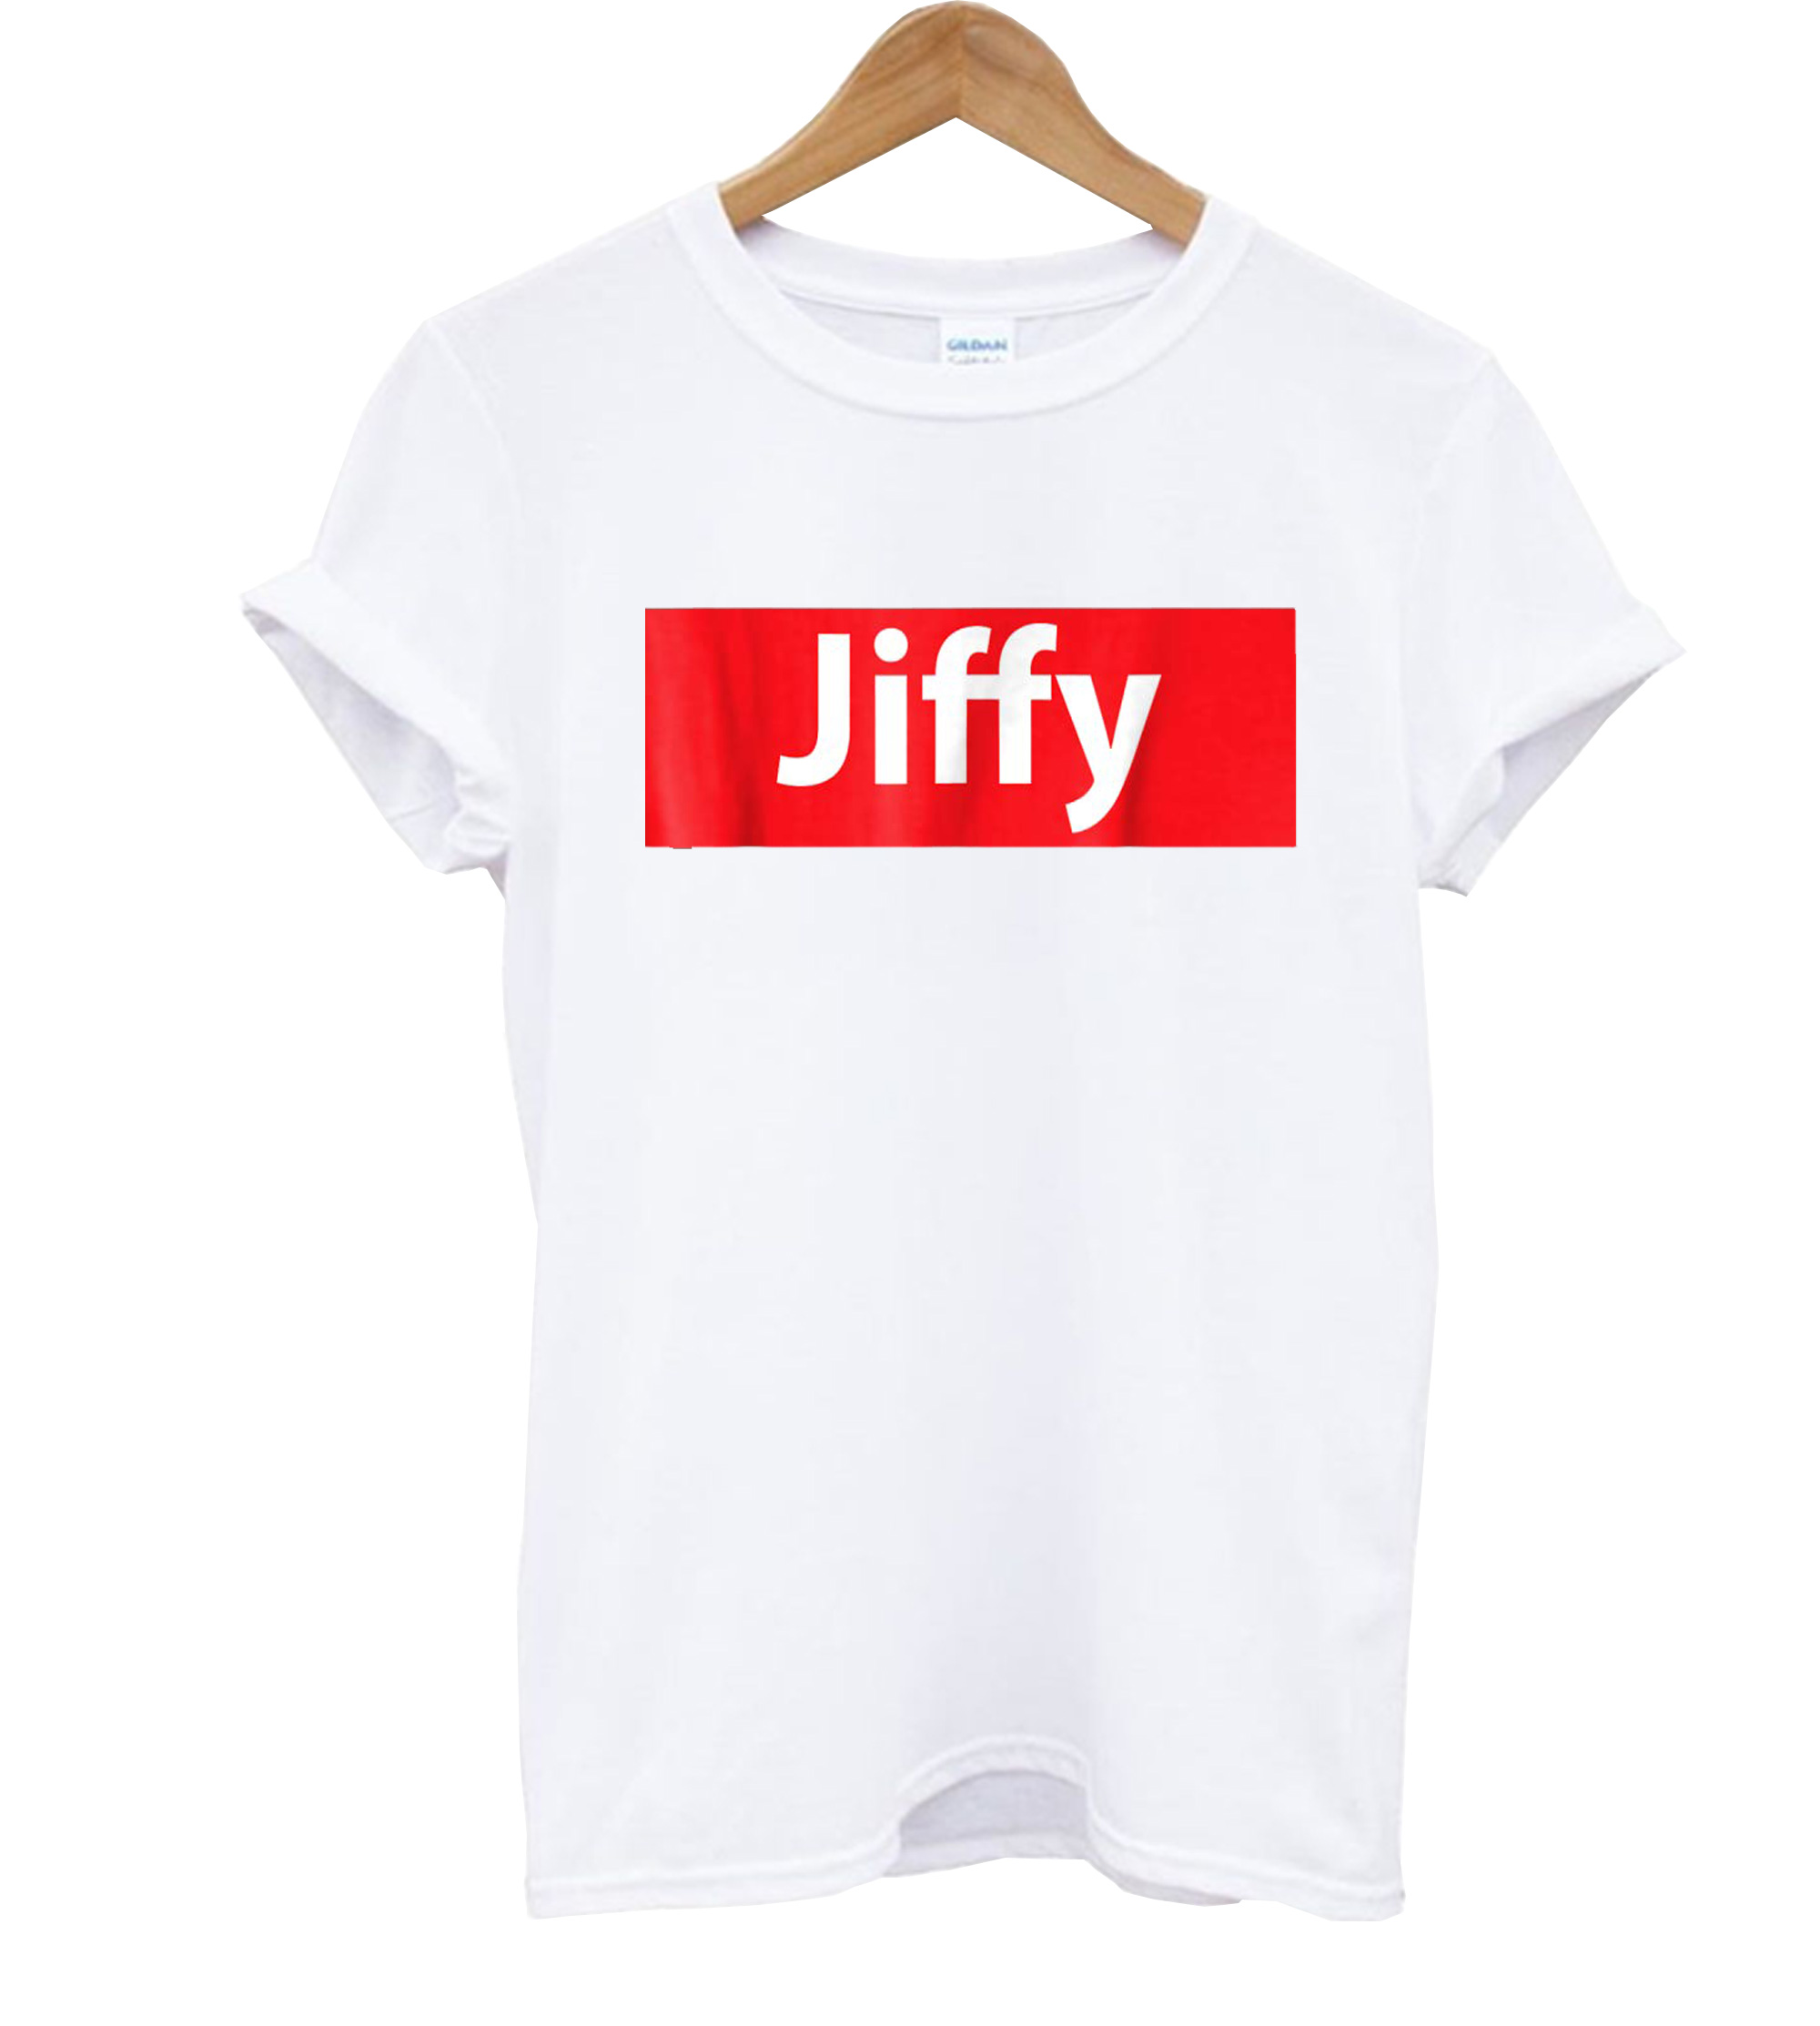 jiffy shirt codes